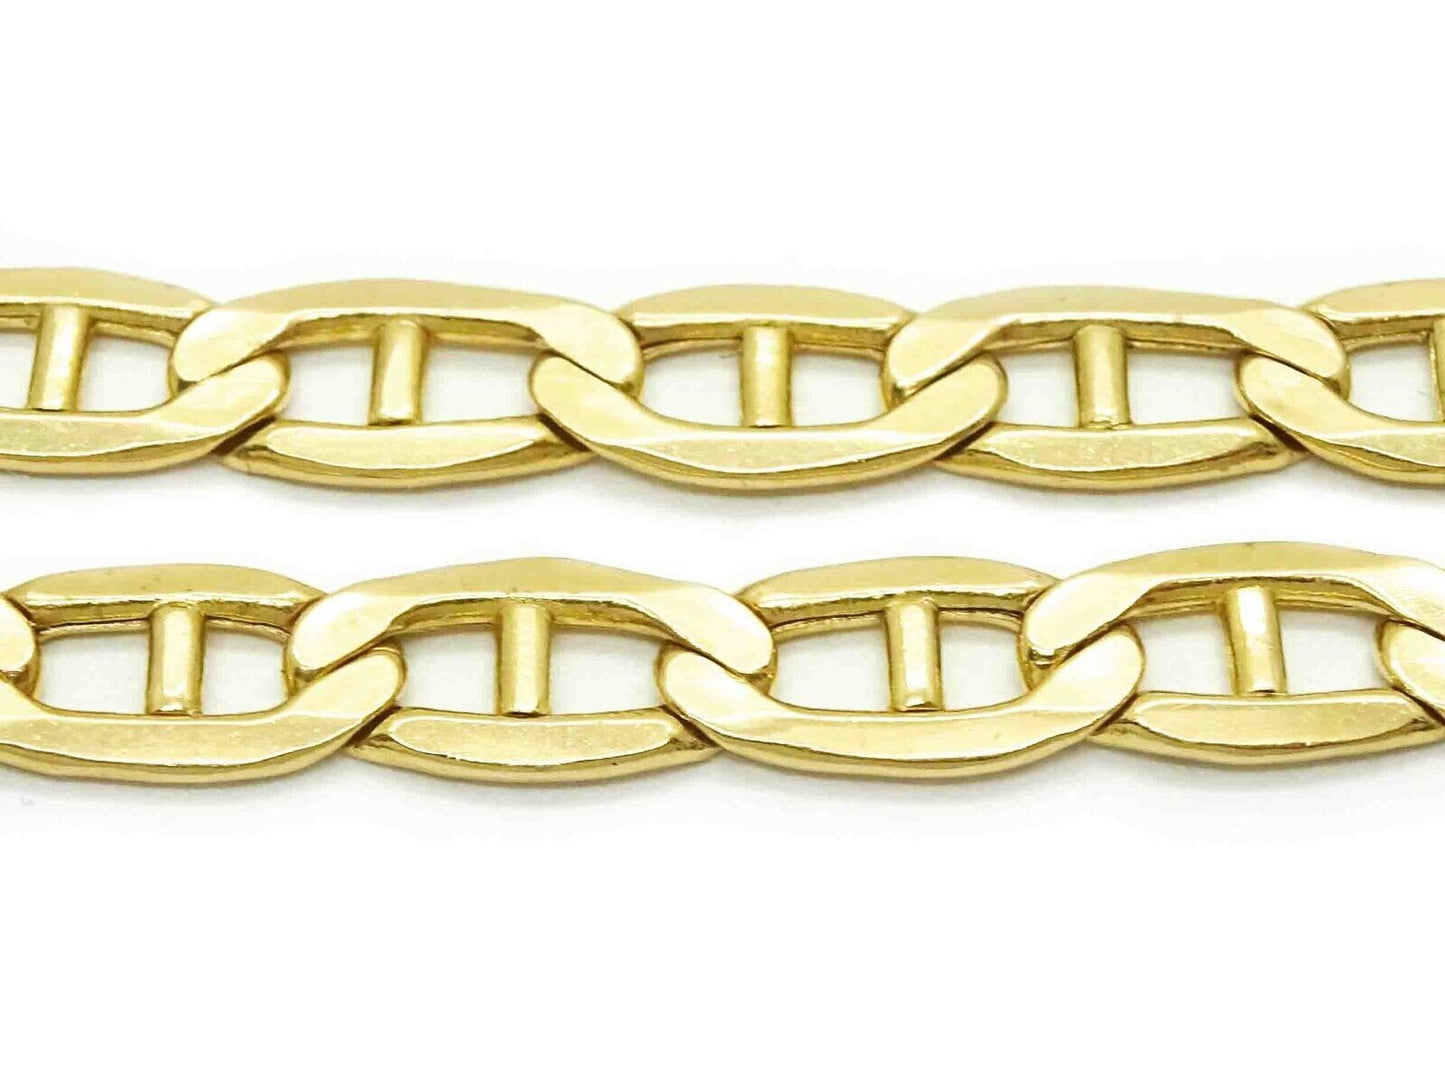 W. Kruk 5mm Wide Mariner Link Chain Necklace 14k Gold 22" Long 10.4 Grams